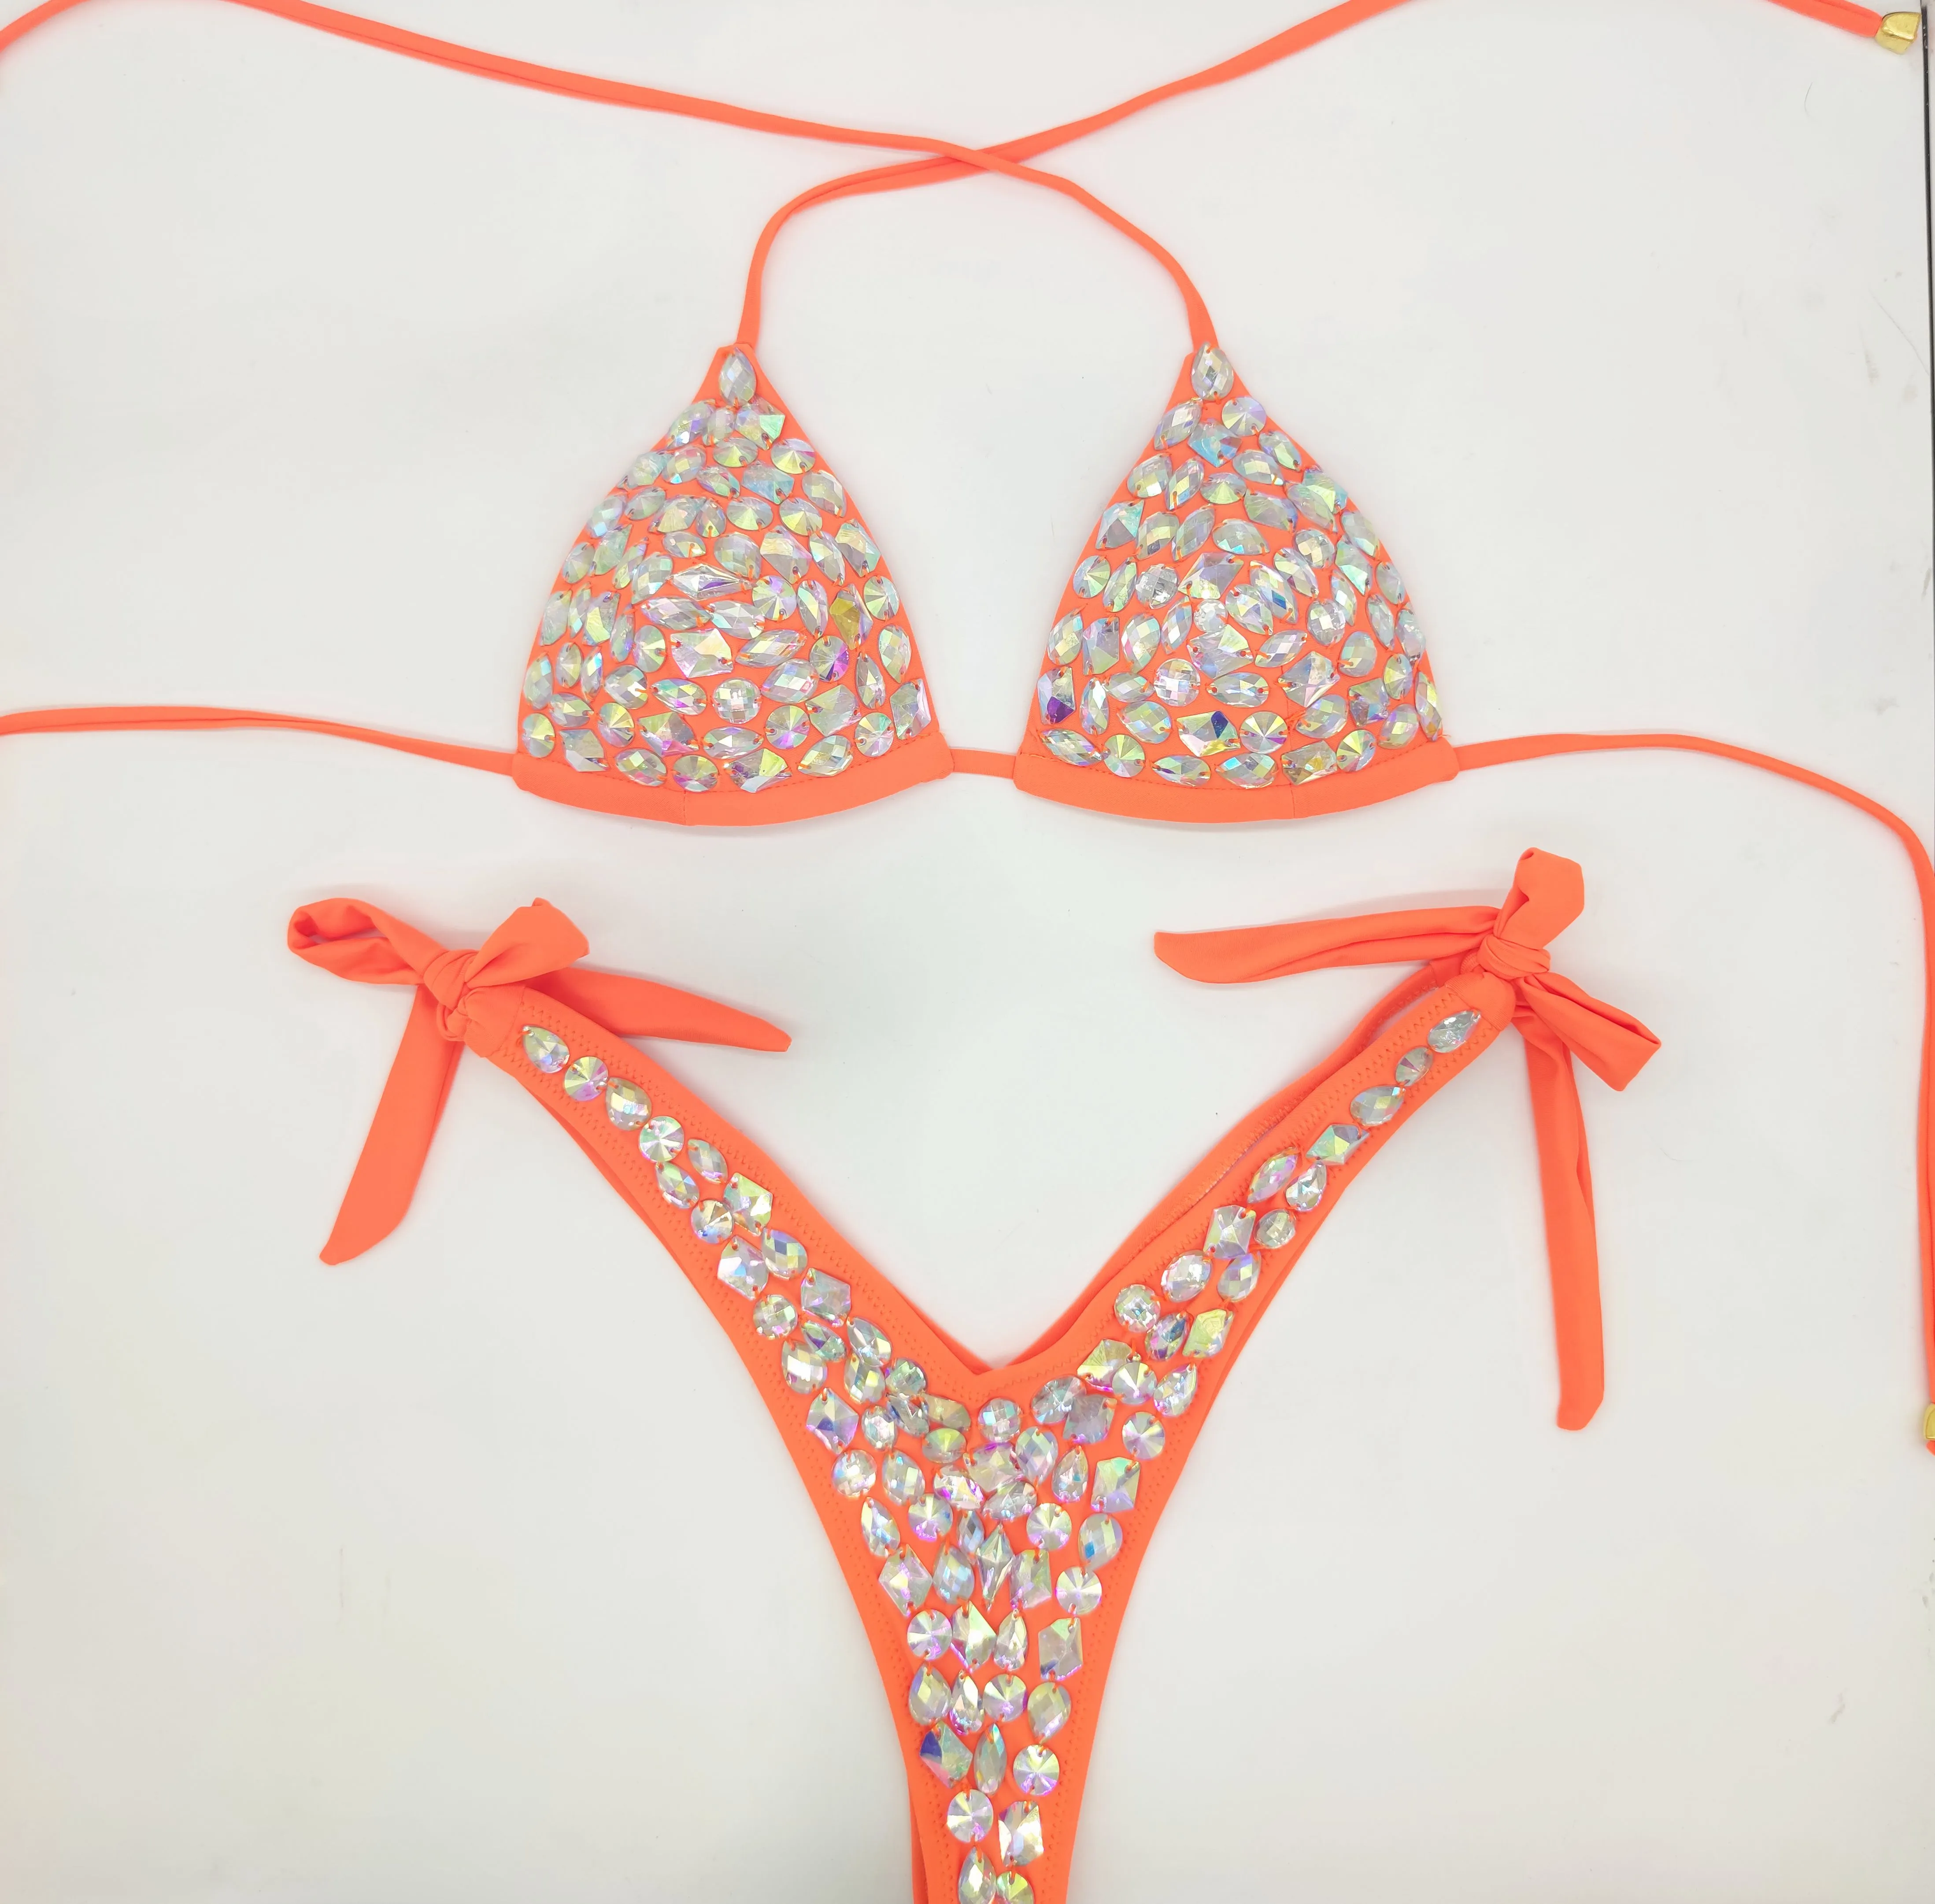 2021 venus vacation diamond bikini set rhinestone swimwear crystal bathing suit sexy women biquini bling stones swimsuit81262431267131